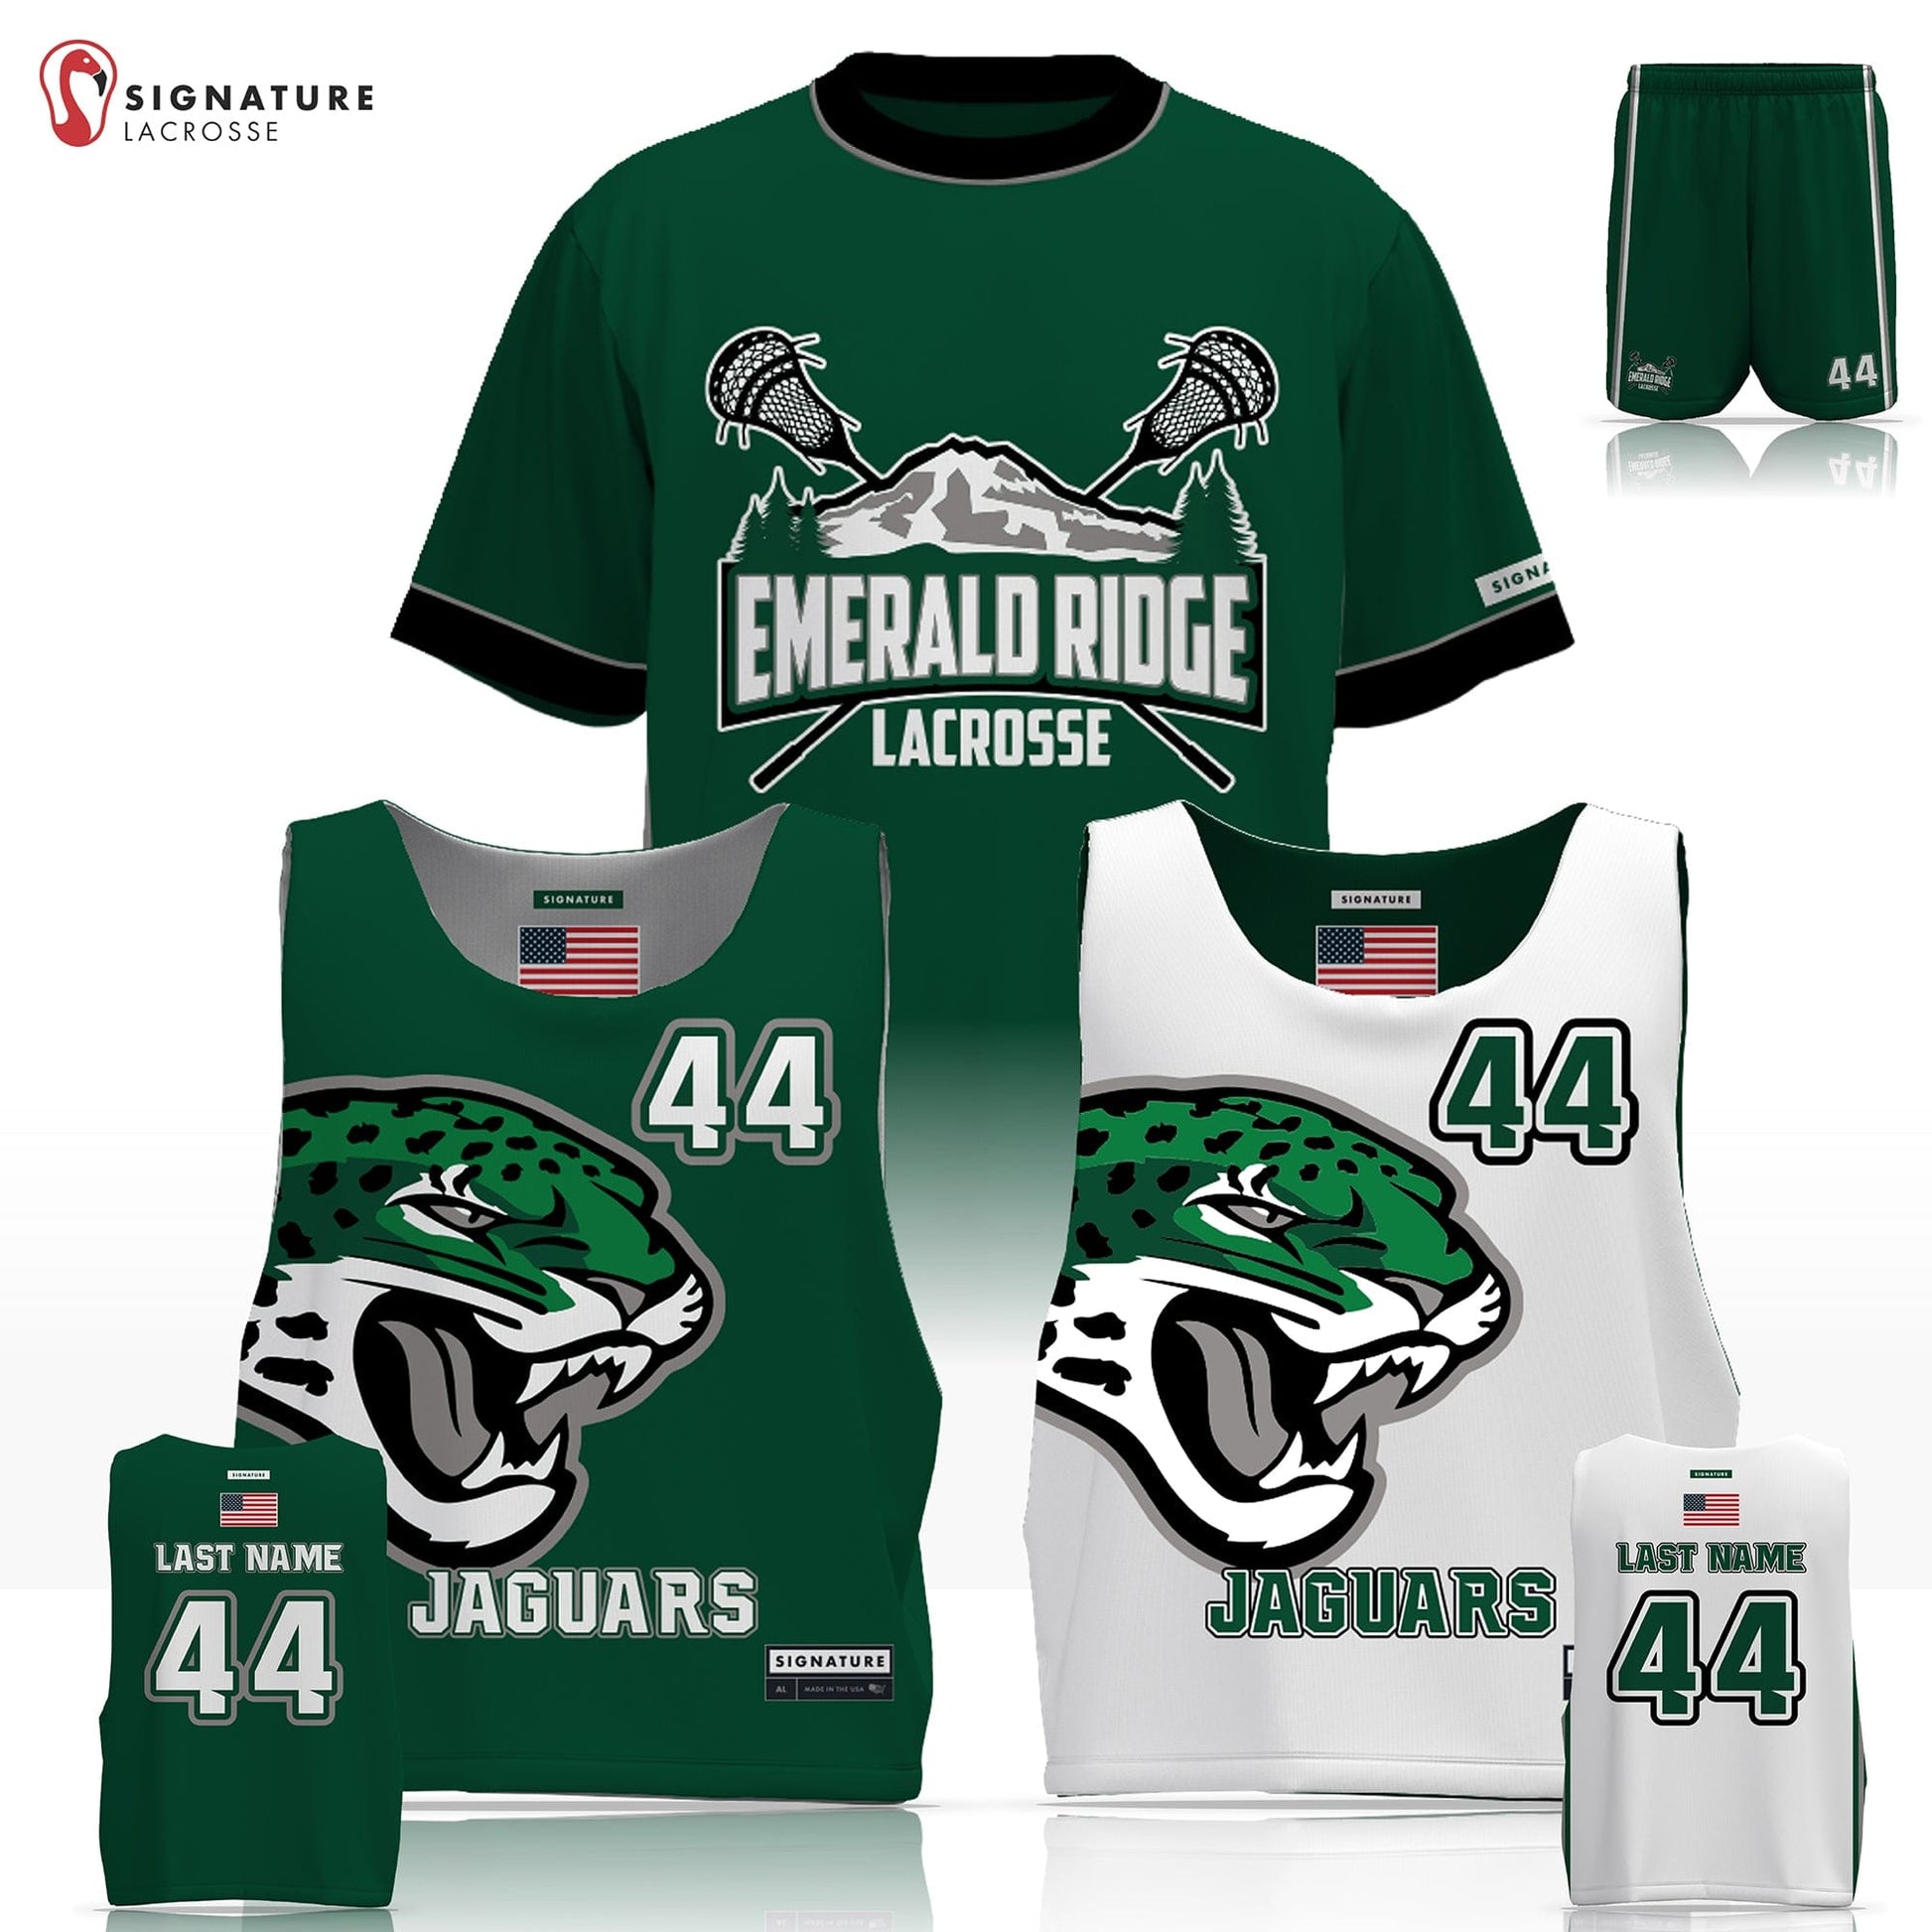 Emerald Ridge Lacrosse Men’s 3 Piece Game Package Signature Lacrosse